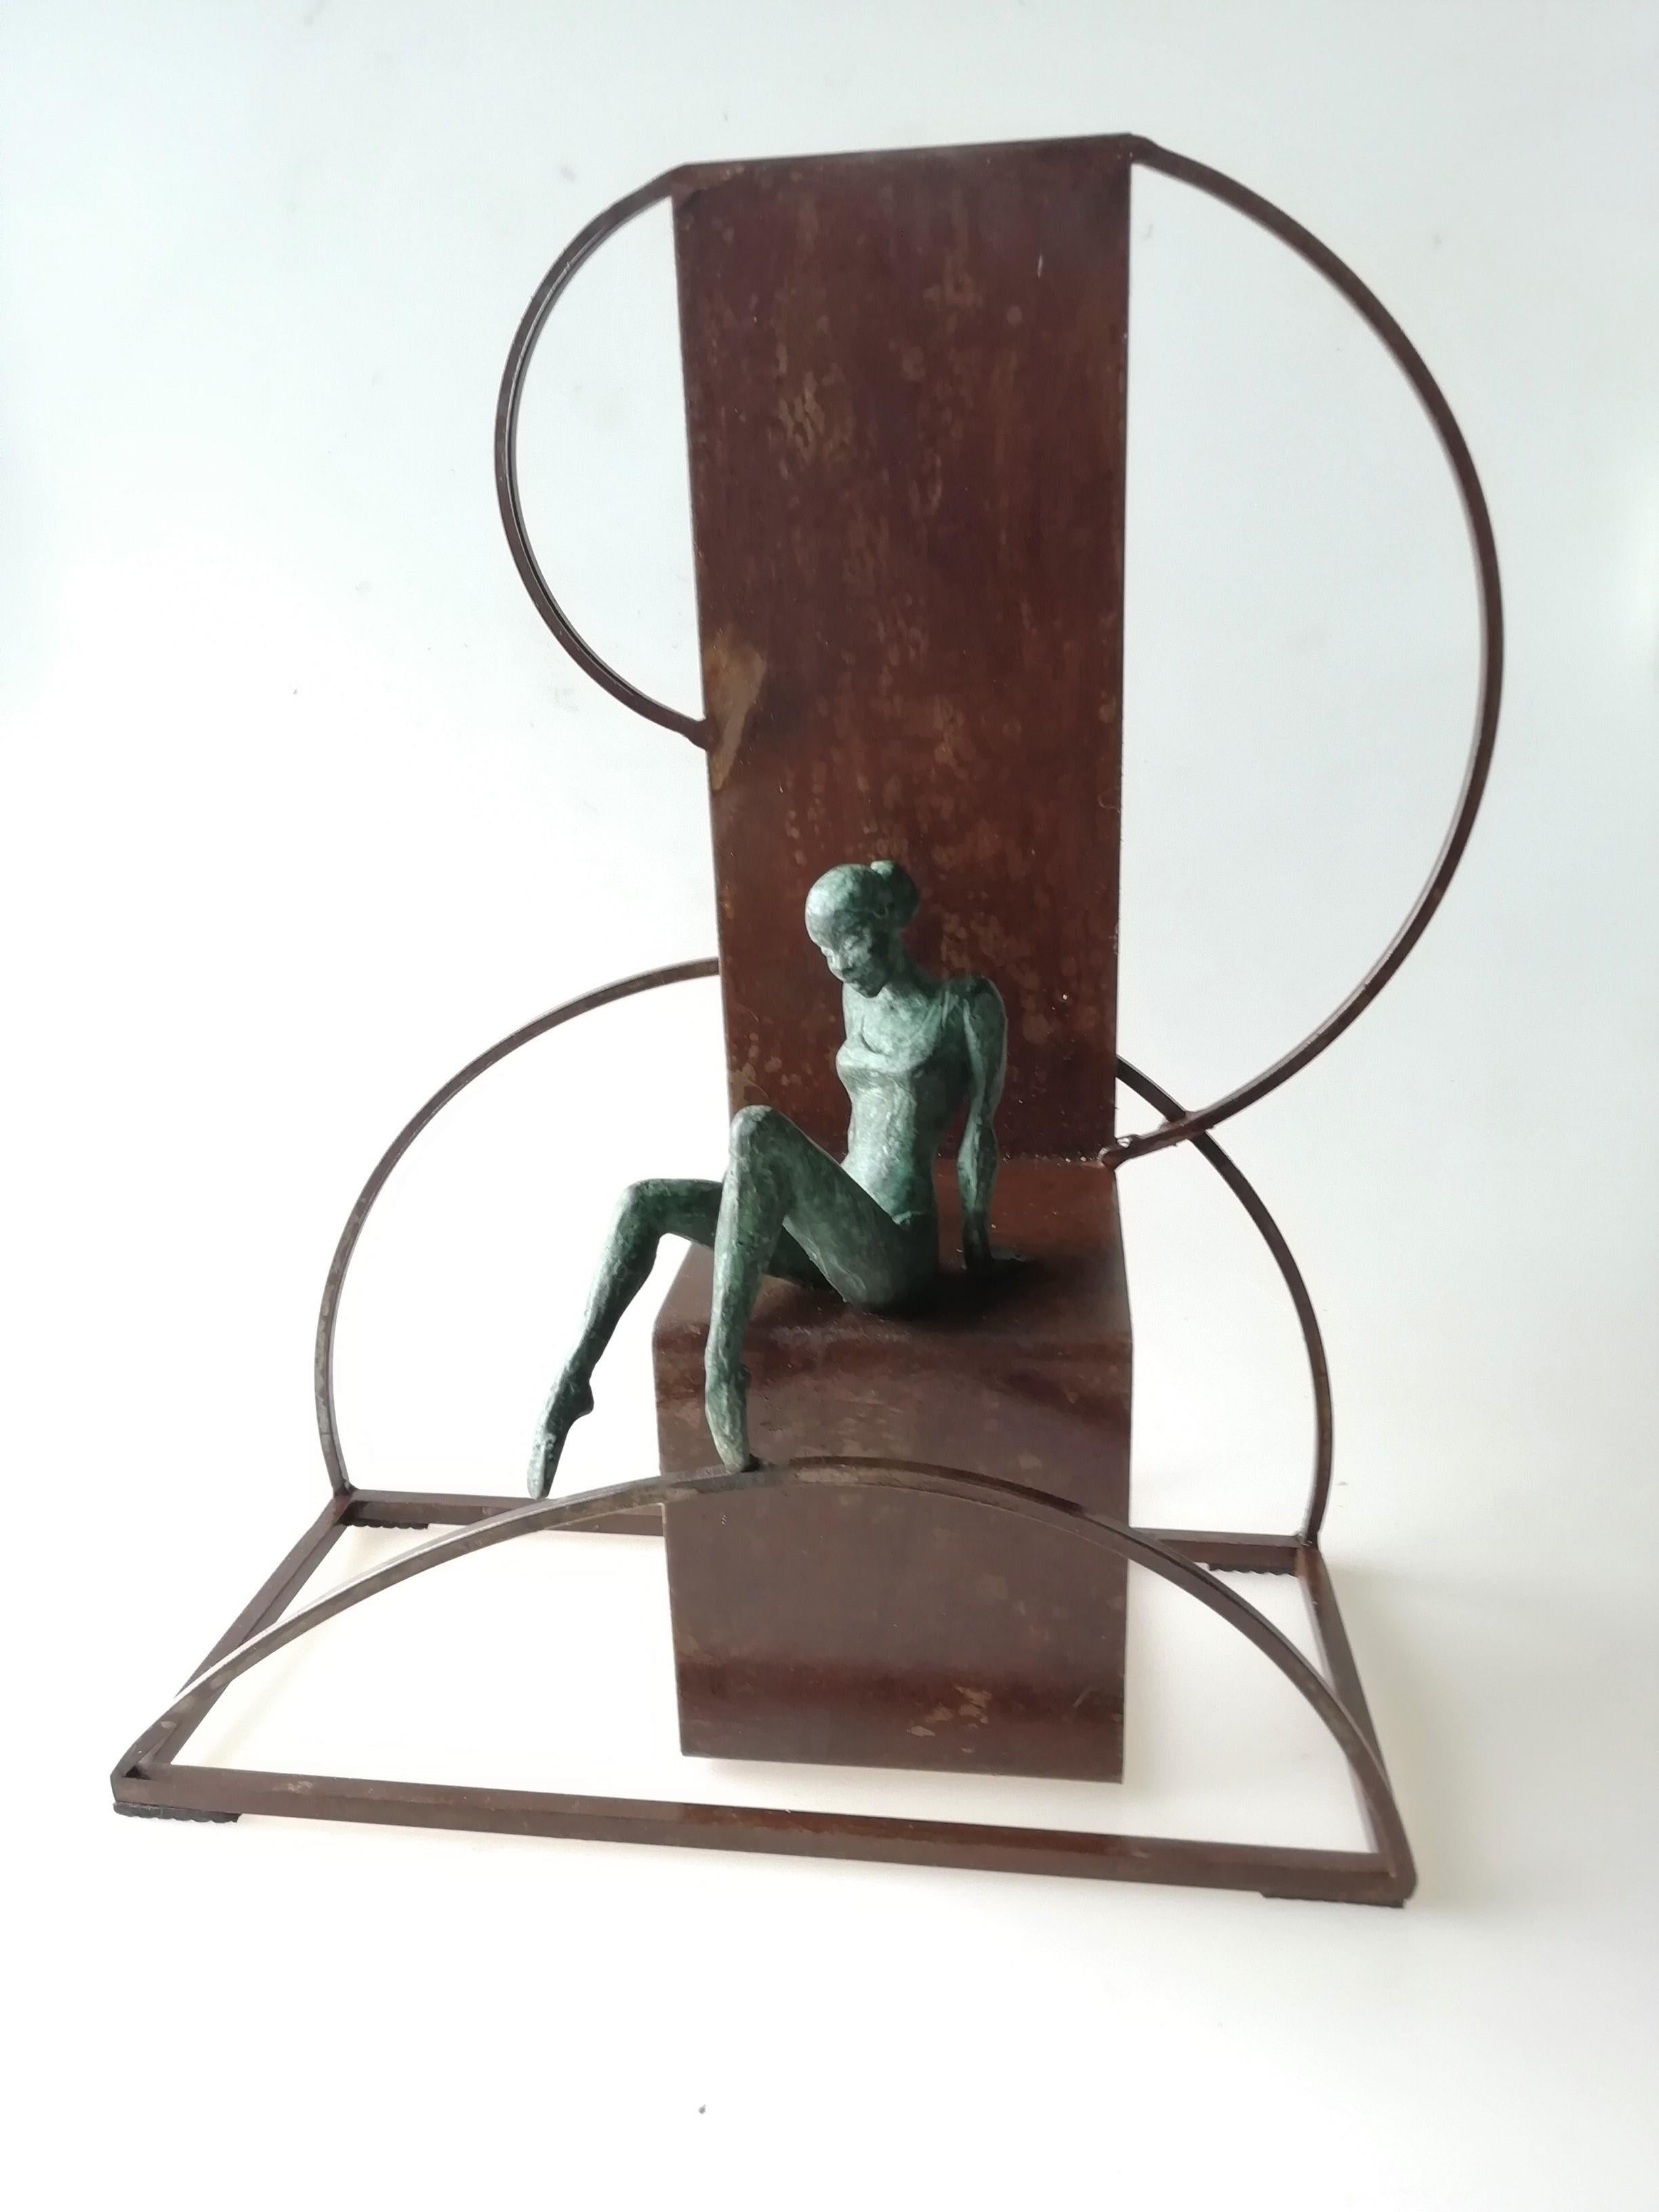 Joan Artigas Planas Figurative Sculpture - "Ready" contemporary bronze table, mural sculpture figurative ballet dancer 